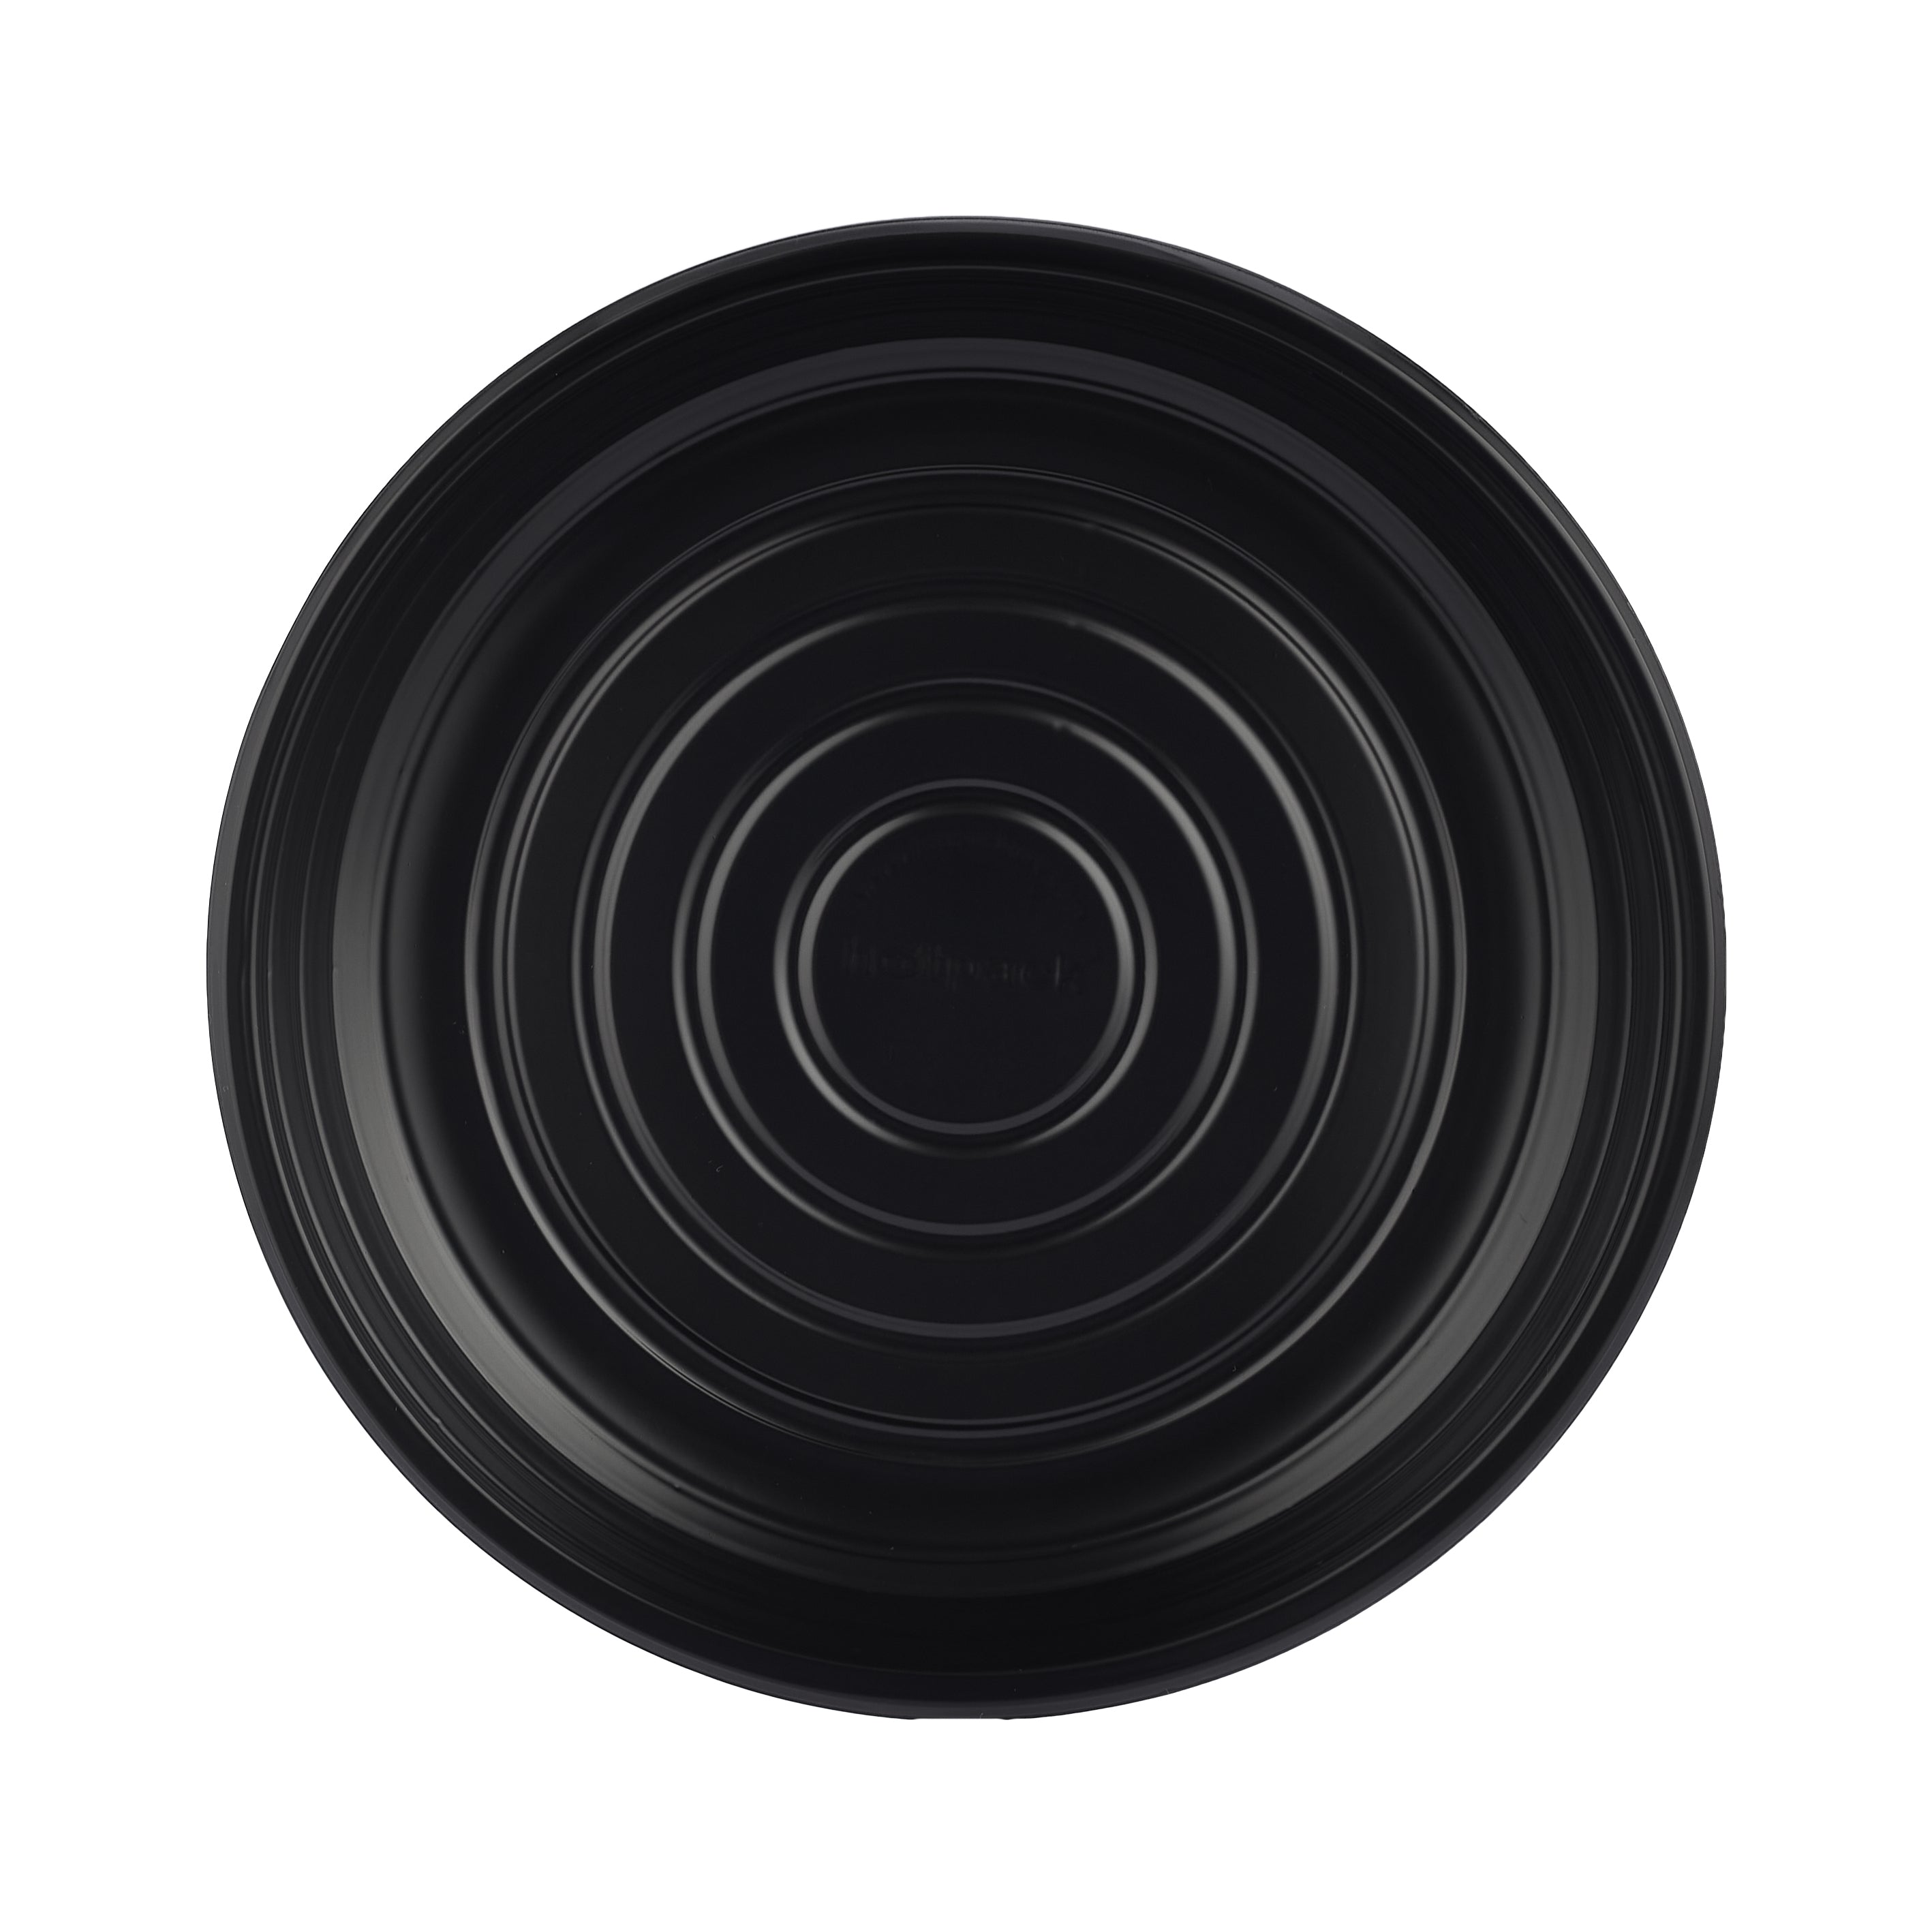 Black Round Microwave Safe Plate - Hotpack Global